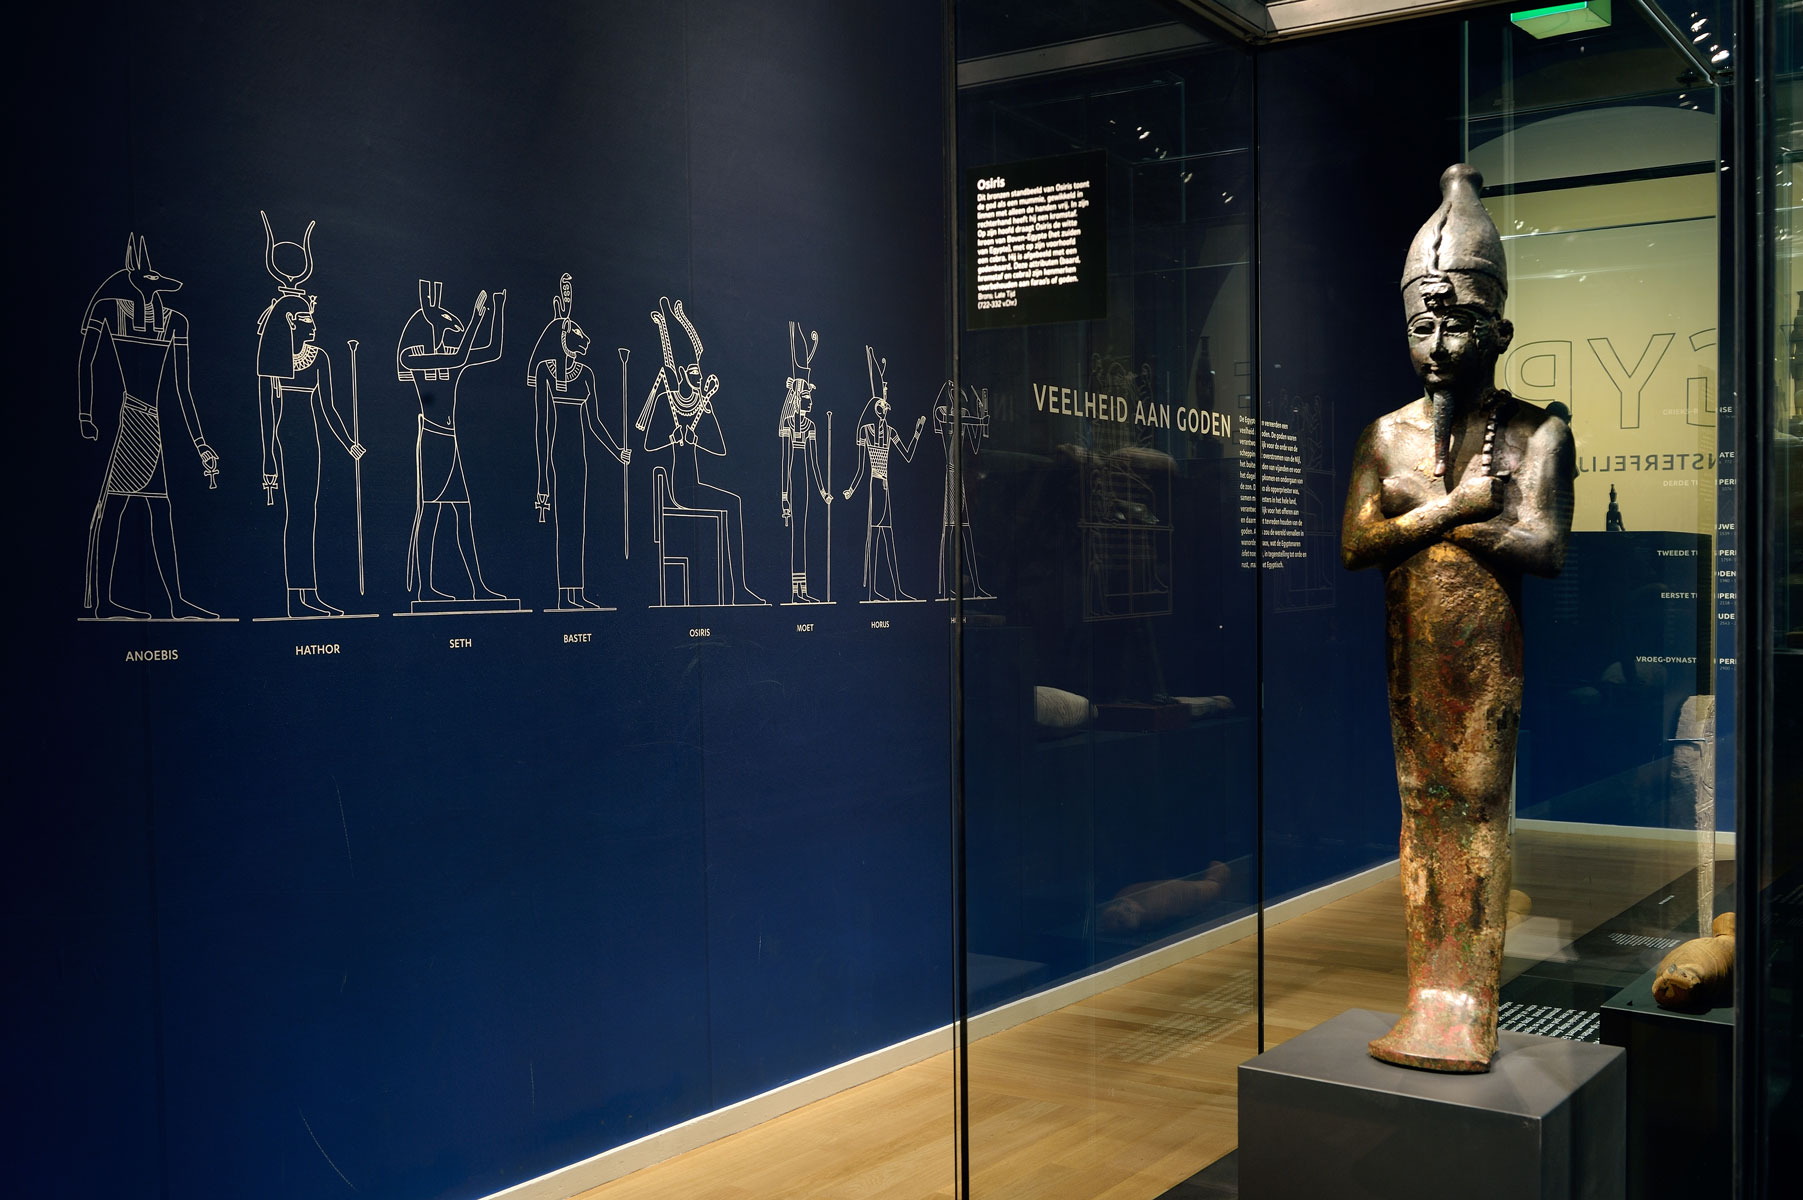 Egypte. Land van onsterfelijkheid Rijksmuseum van Oudheden Lies Willers Kloosterboer tentoonstellingsbouw